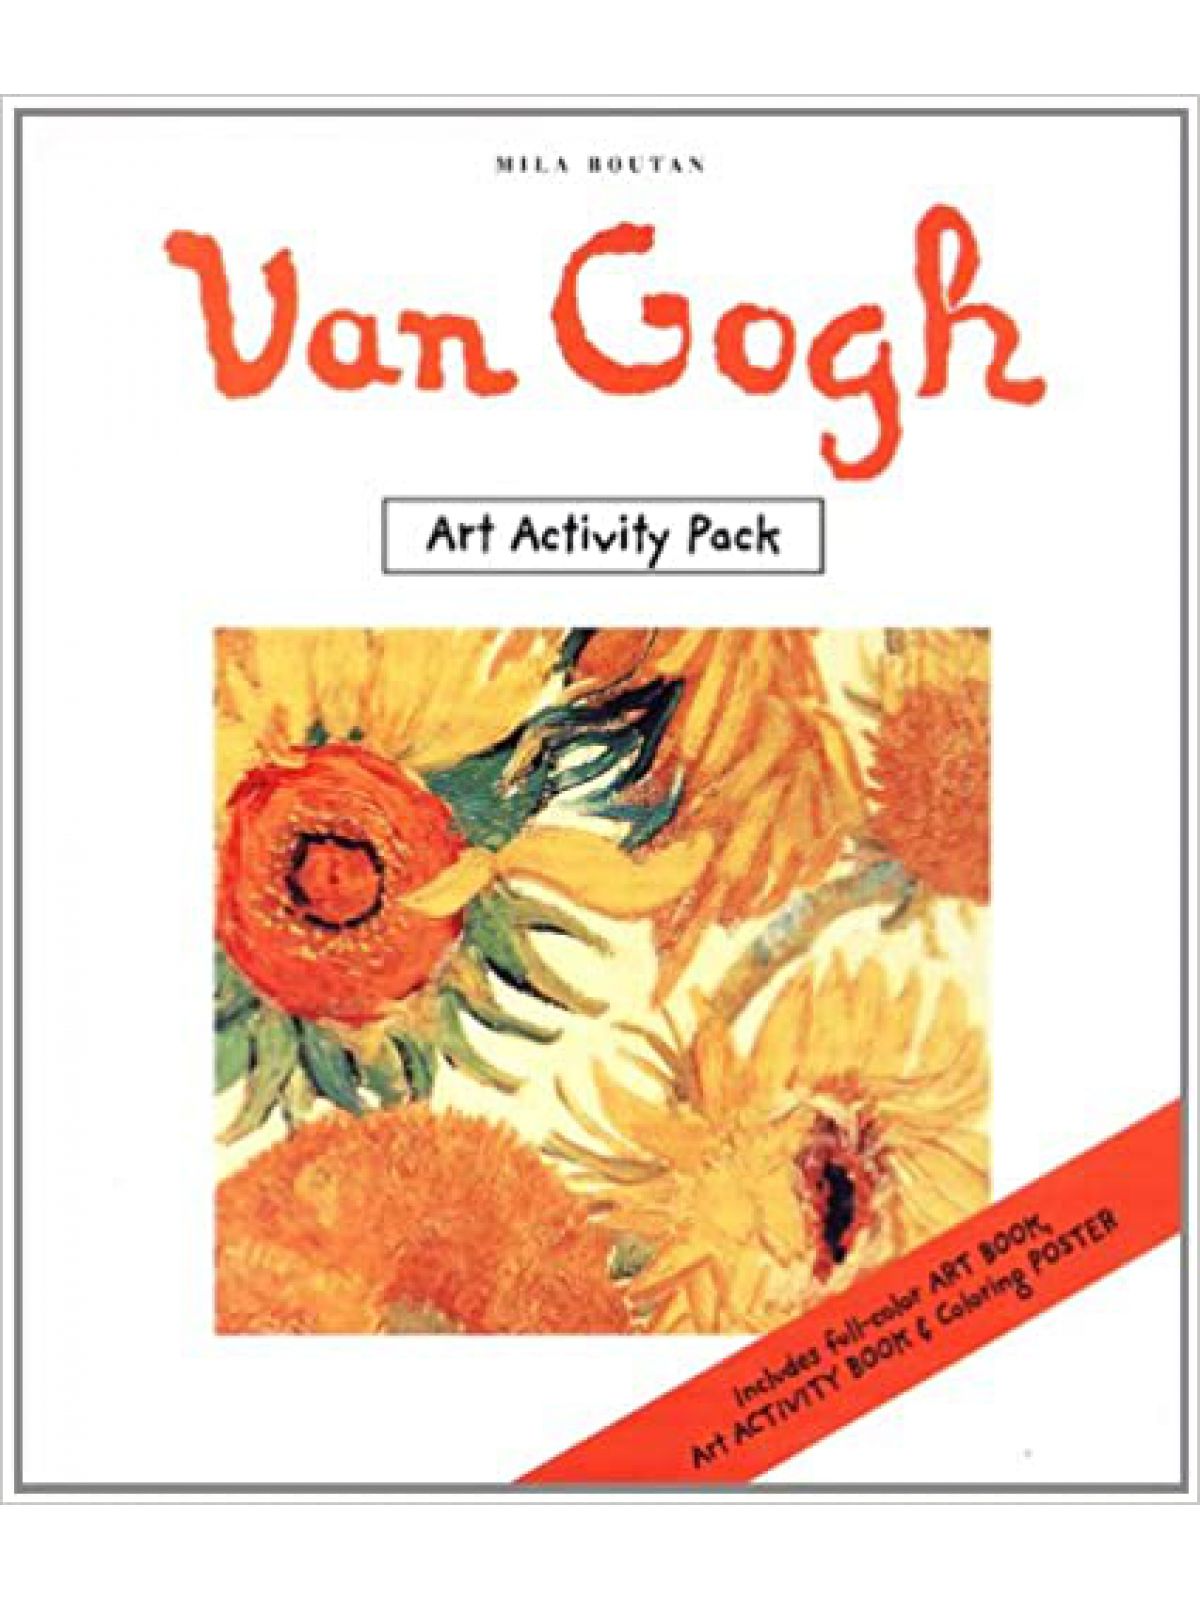 ART ACTIVITY PACKS: VAN GOGH BOUTAN, MILA Купить Книгу на Английском